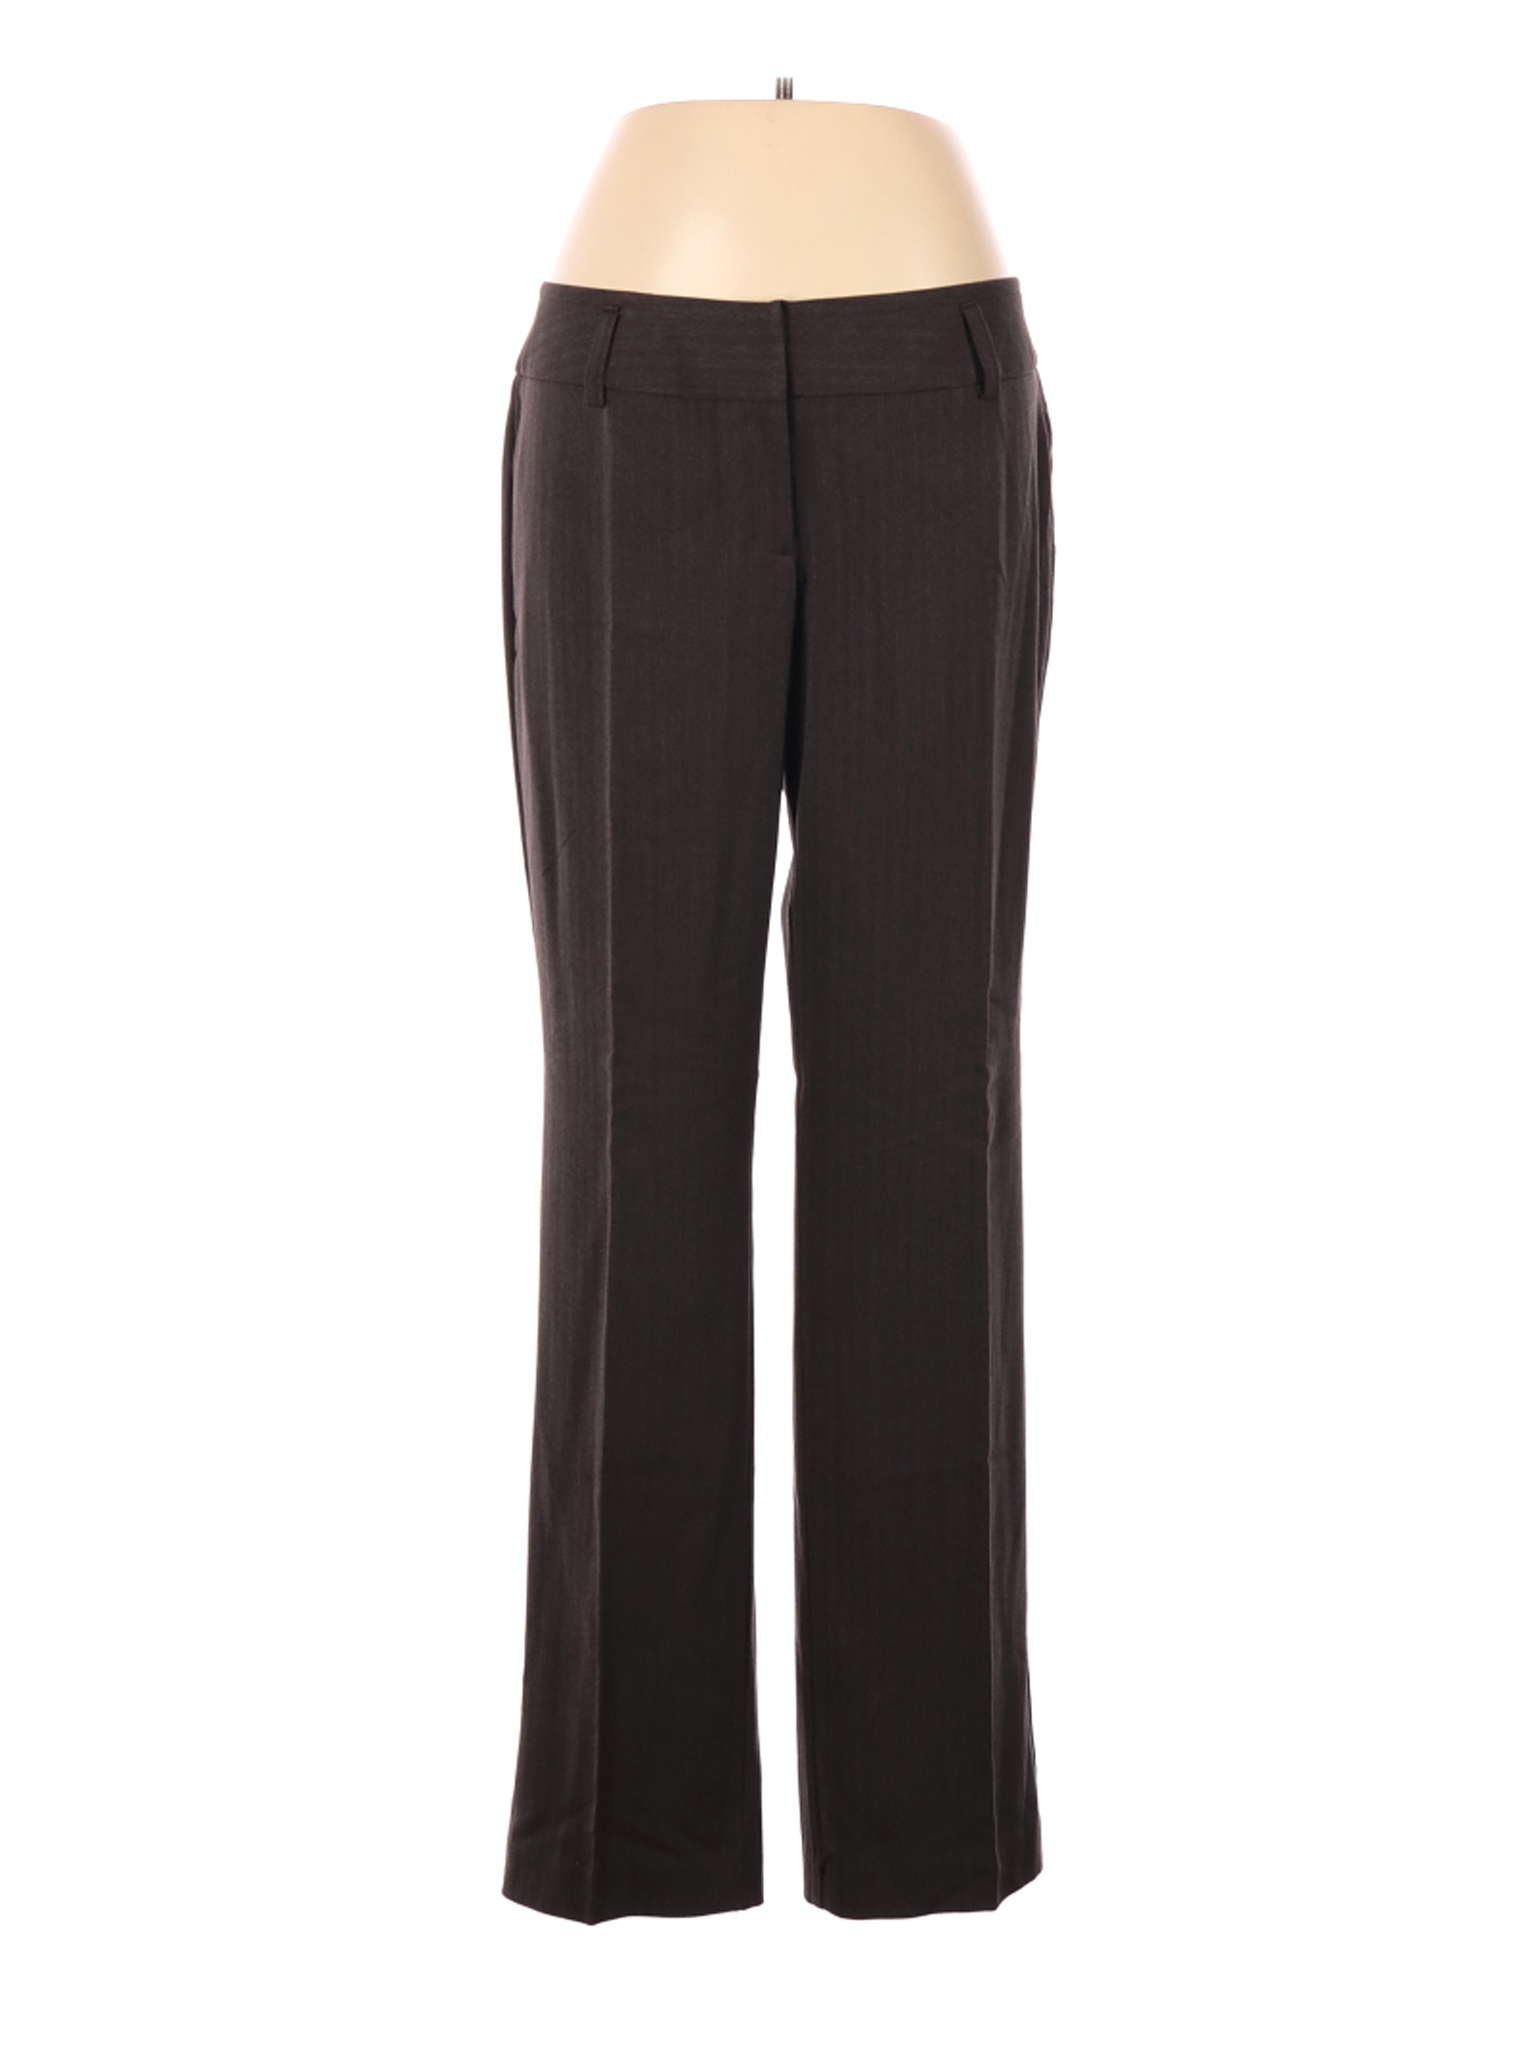 NWT Worthington Women Black Dress Pants 12 | eBay